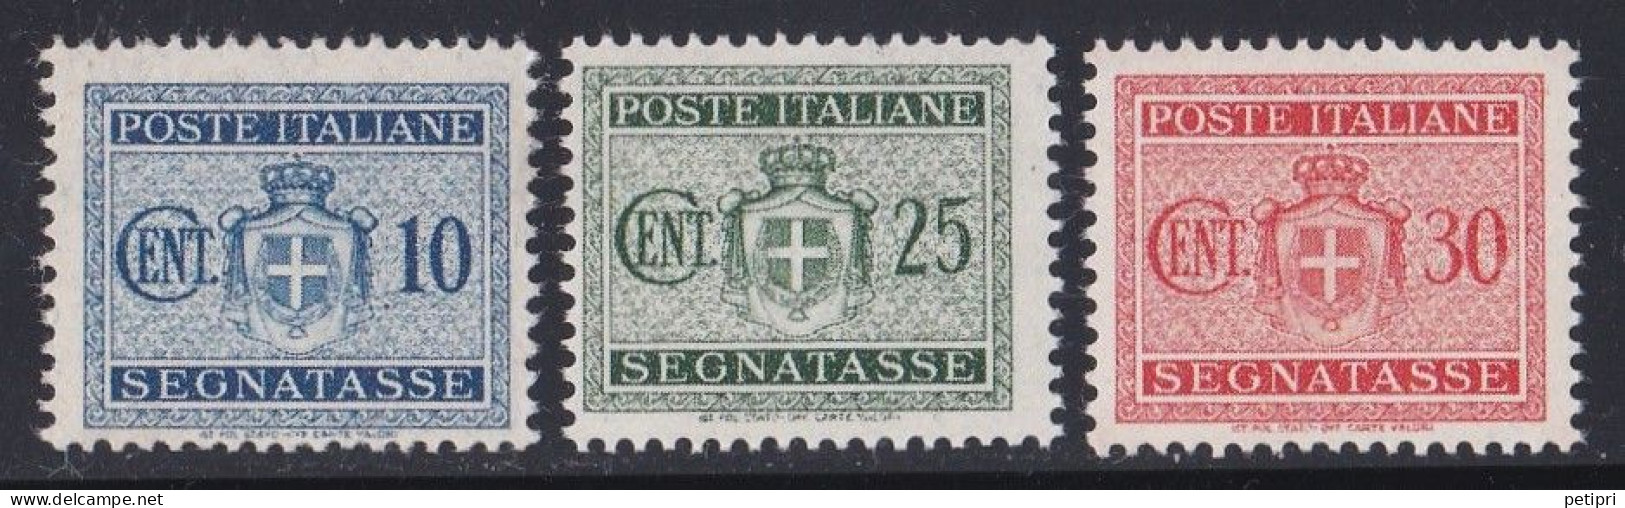 Italie - 1947  République  - Taxe  Y&T  N ° 54  55  56   Neuf ** - Impuestos